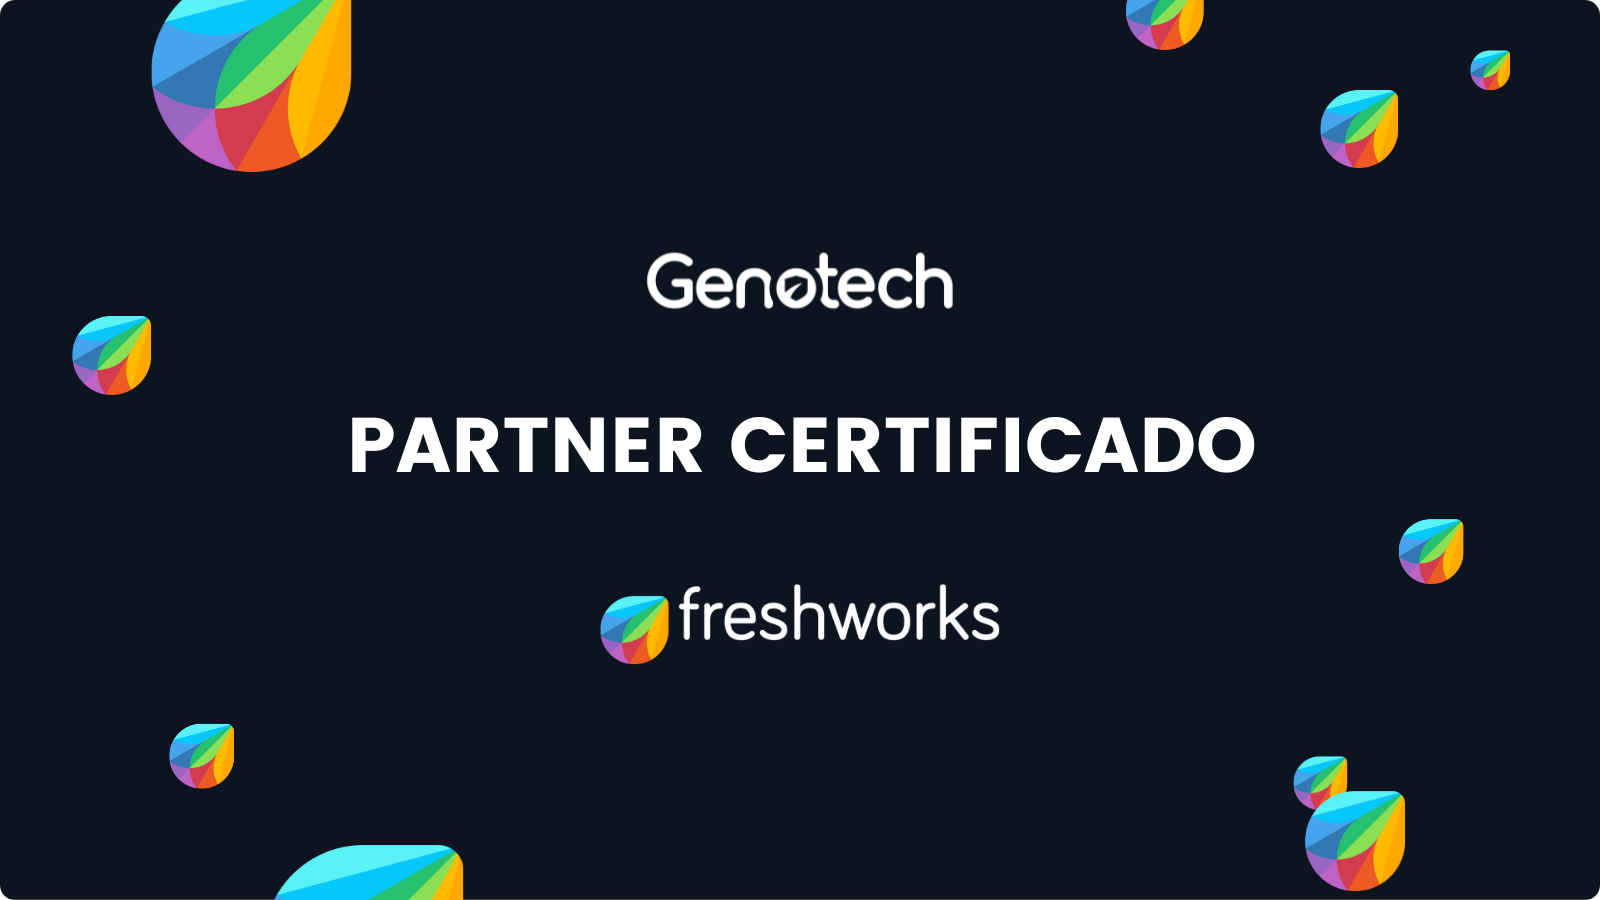 Genotech - Partner certificado Freshworks